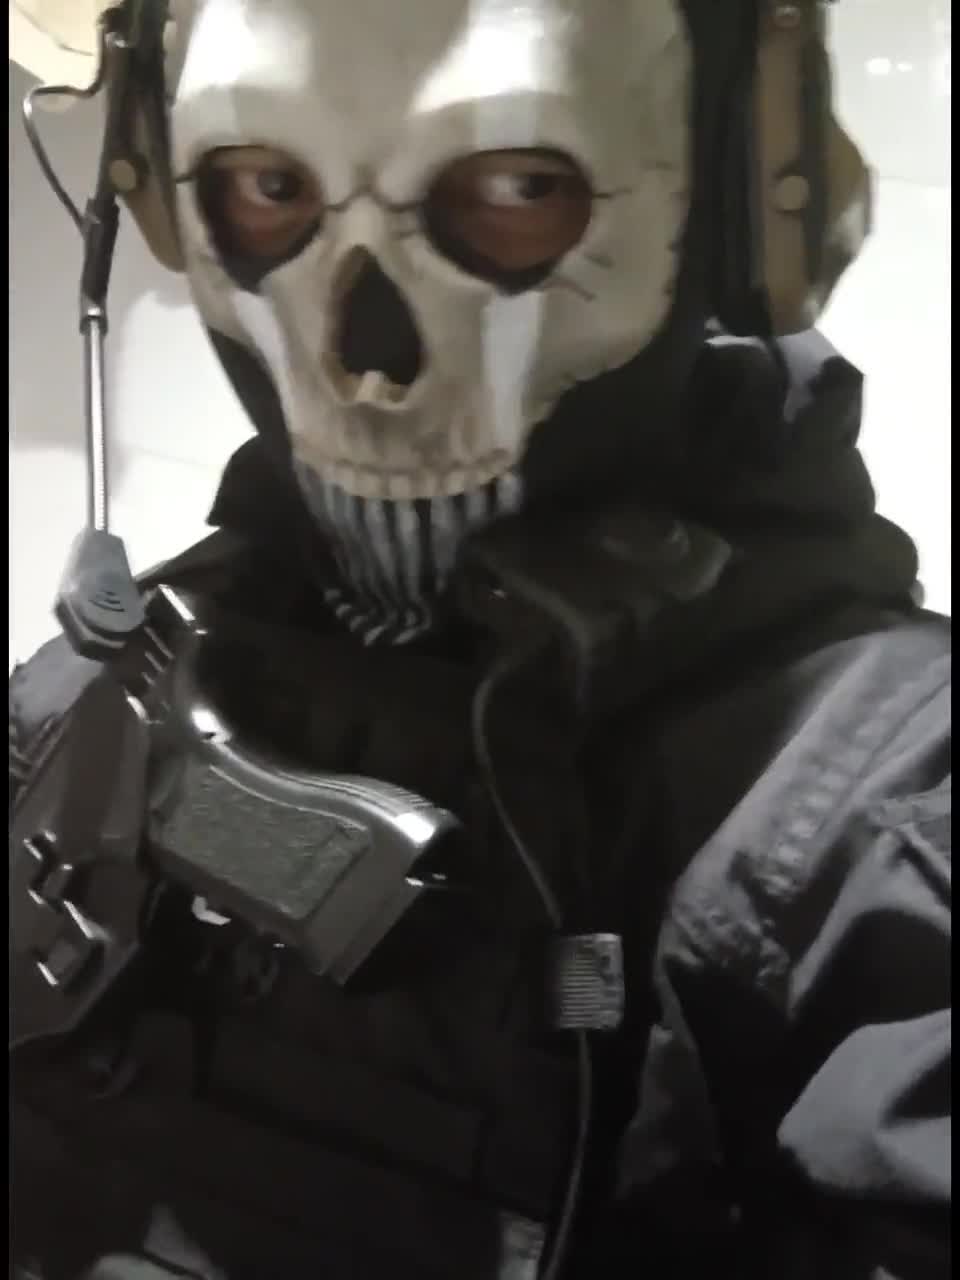 Le masque de Ghost (Call of Duty) IRL 😮